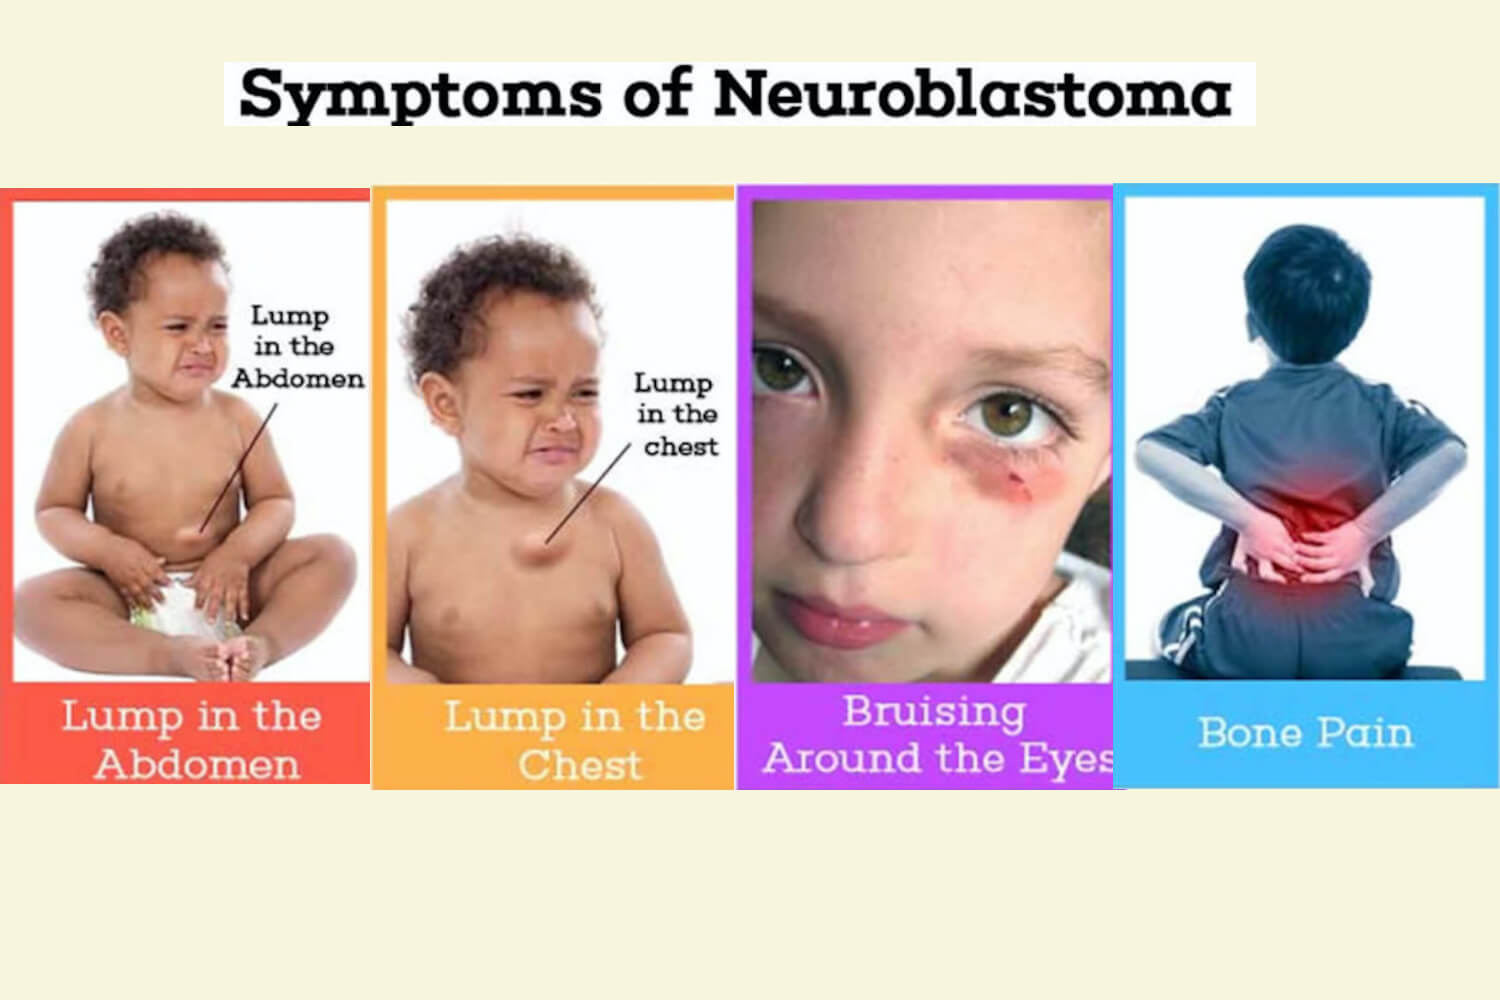 Symptoms of Neuroblastoma in Children